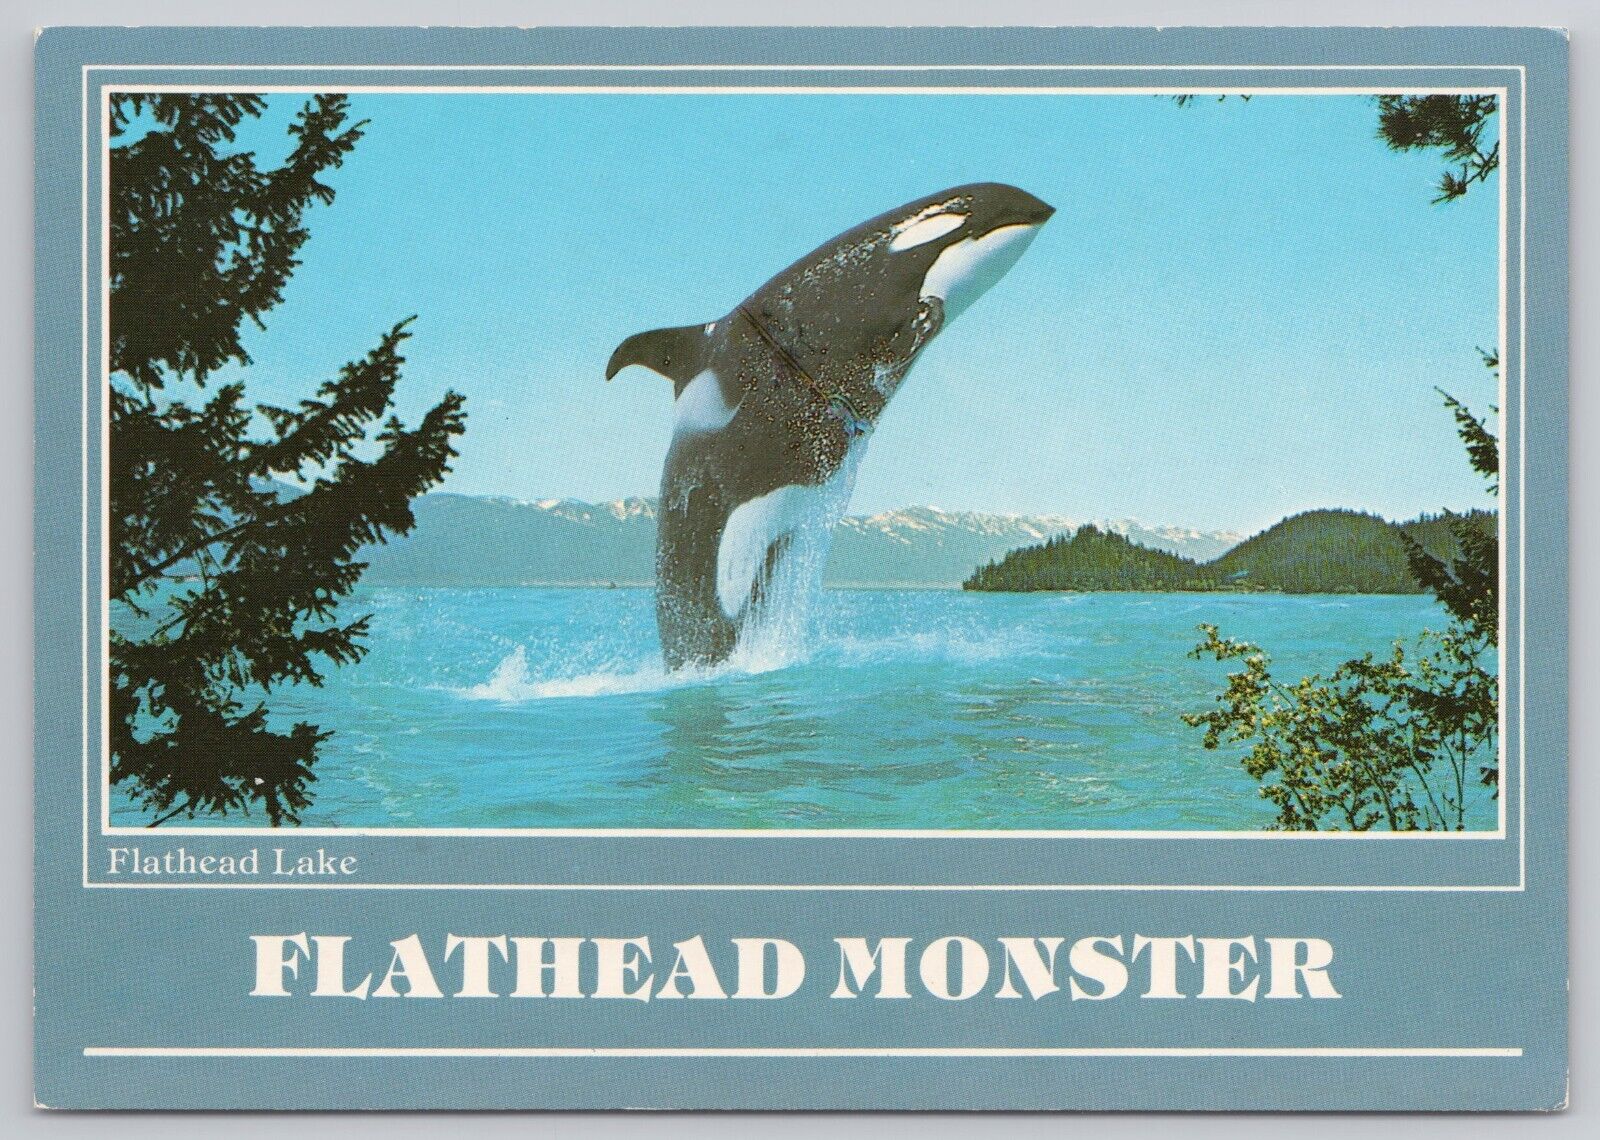 Polson Montana, Flathead Lake Monster Orca Killer Whale, Vintage Postcard